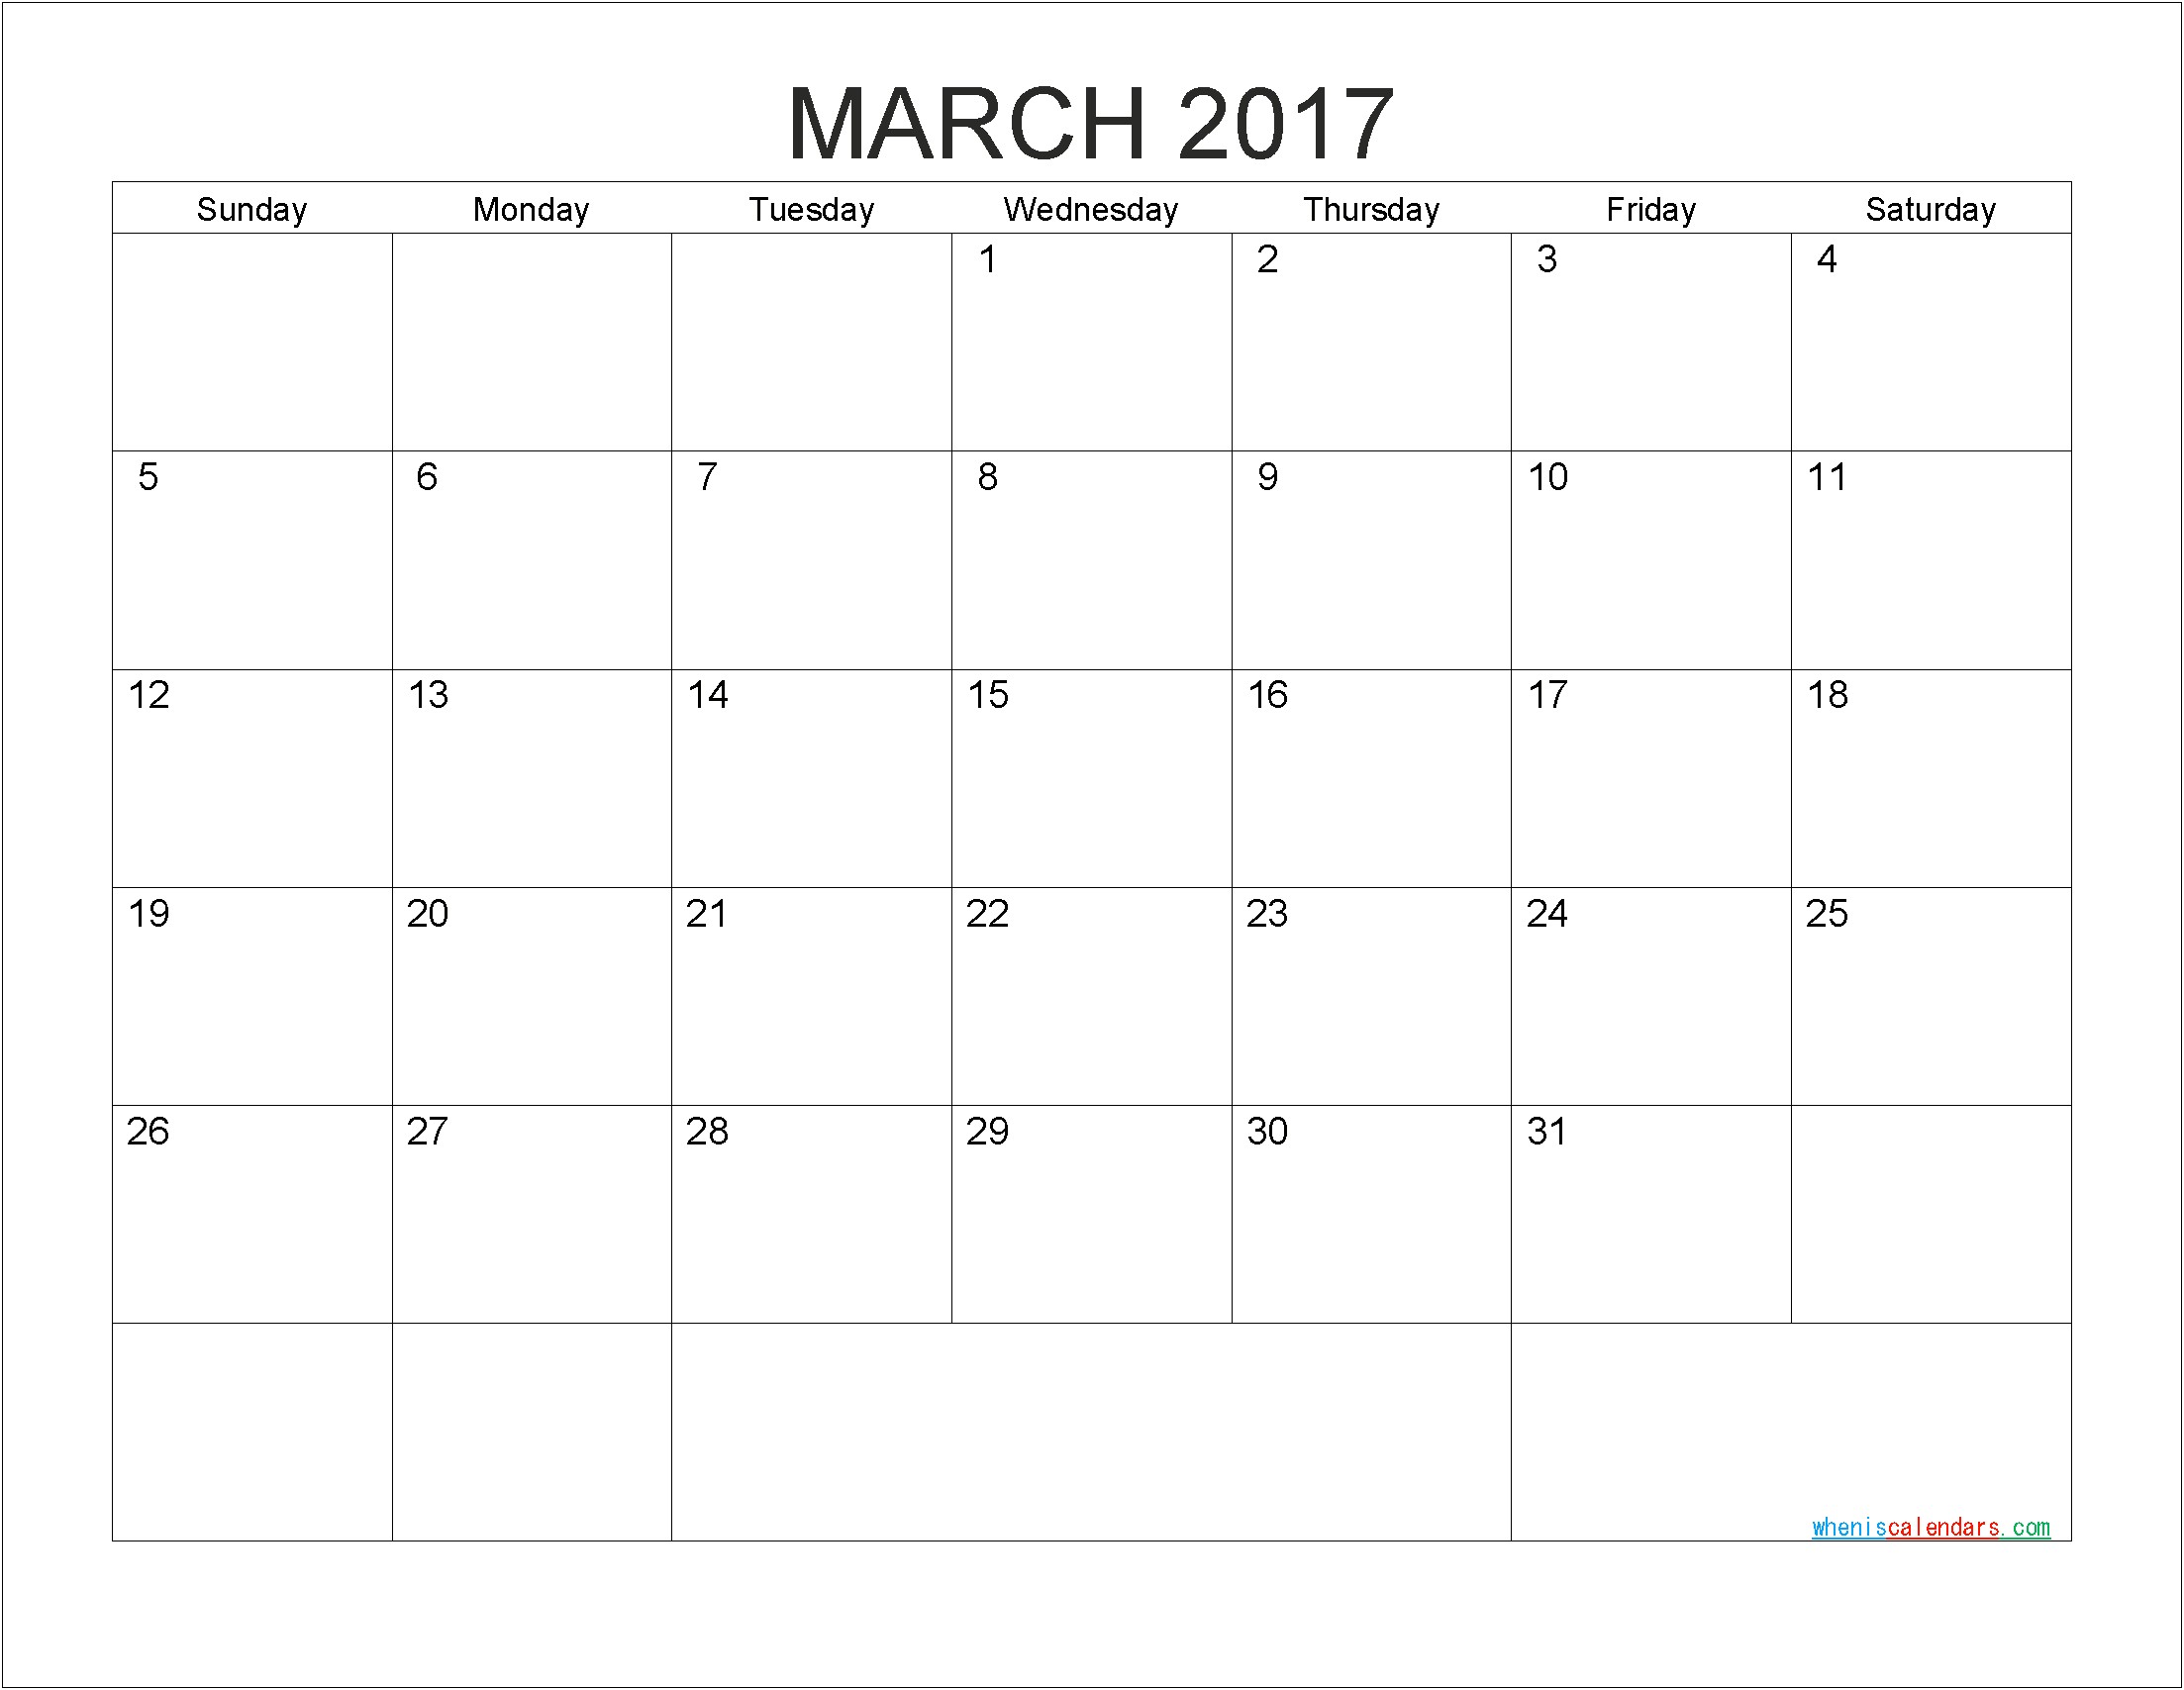 Free Printable Calendar Templates February 2017